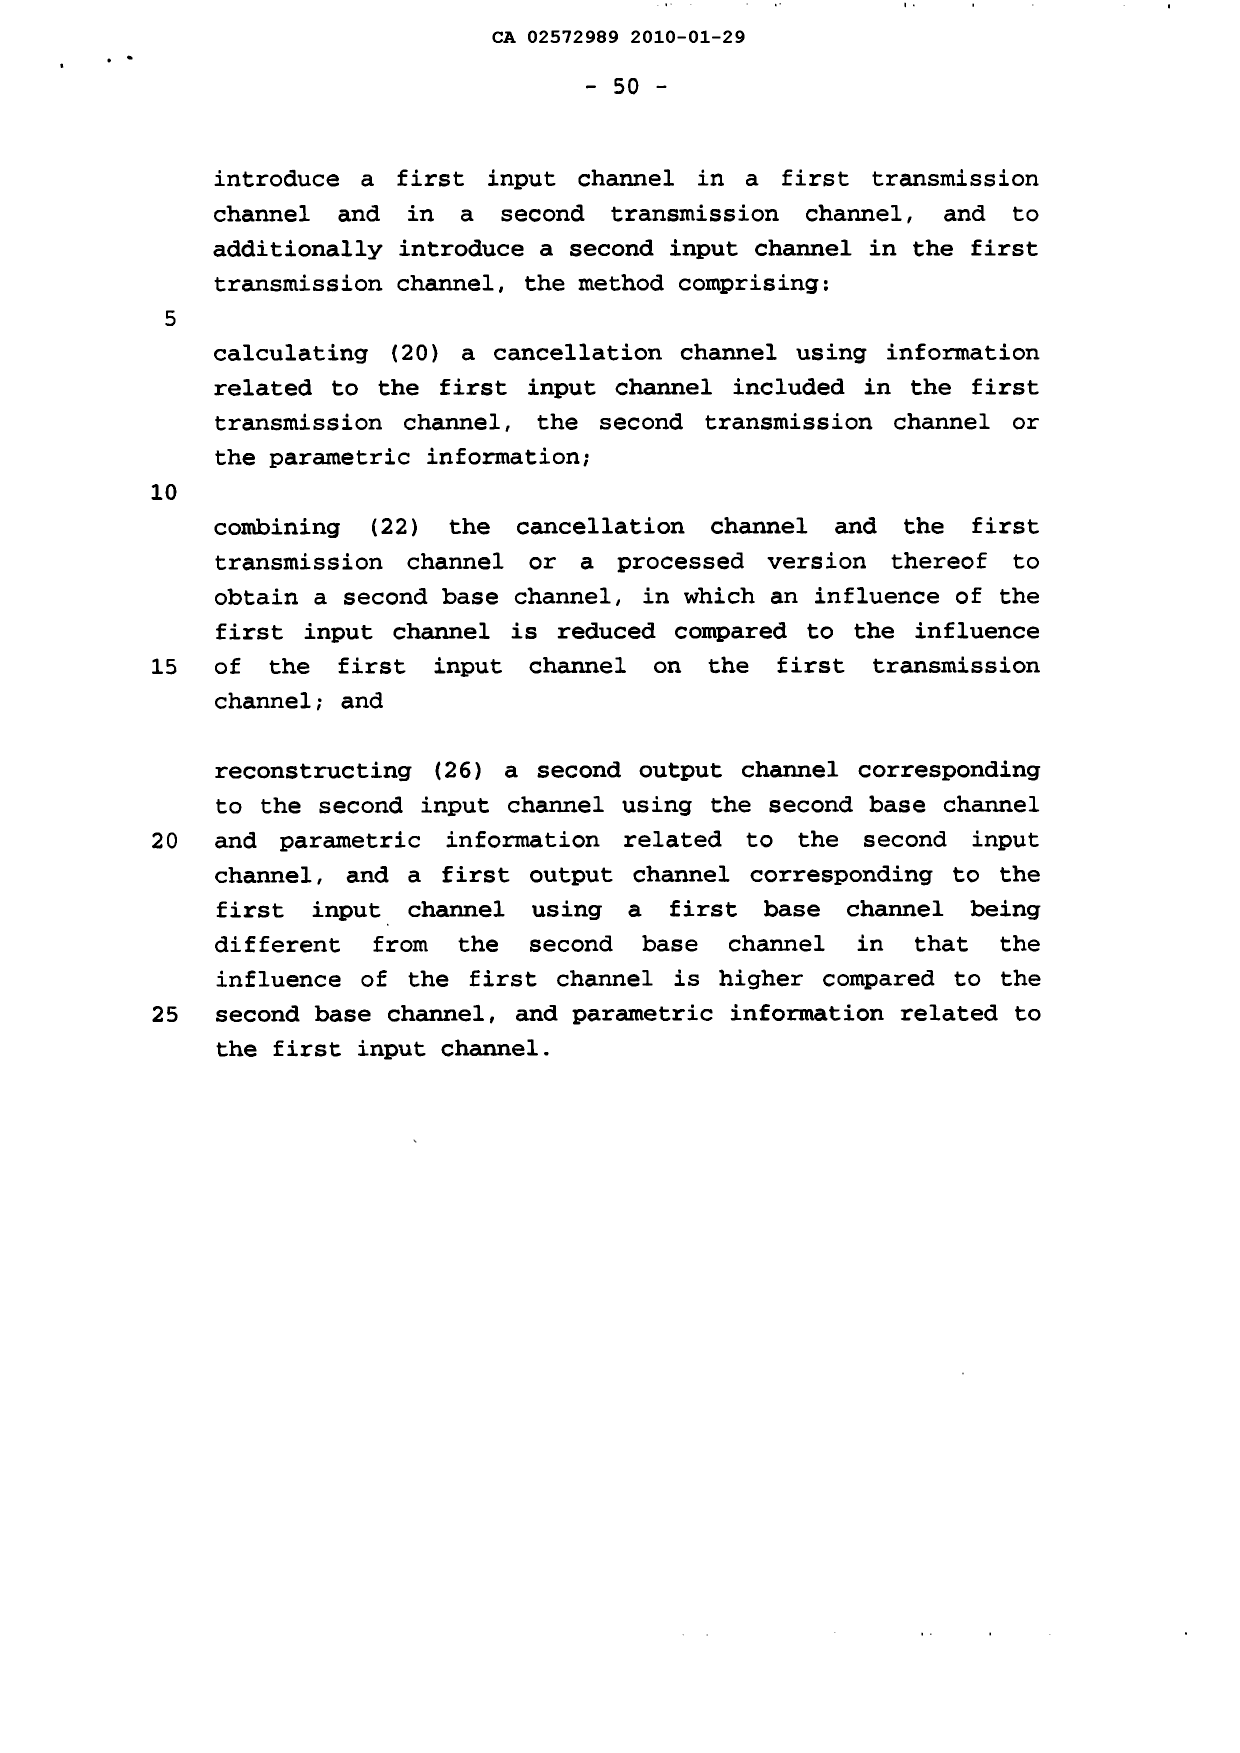 Canadian Patent Document 2572989. Prosecution-Amendment 20100129. Image 18 of 18